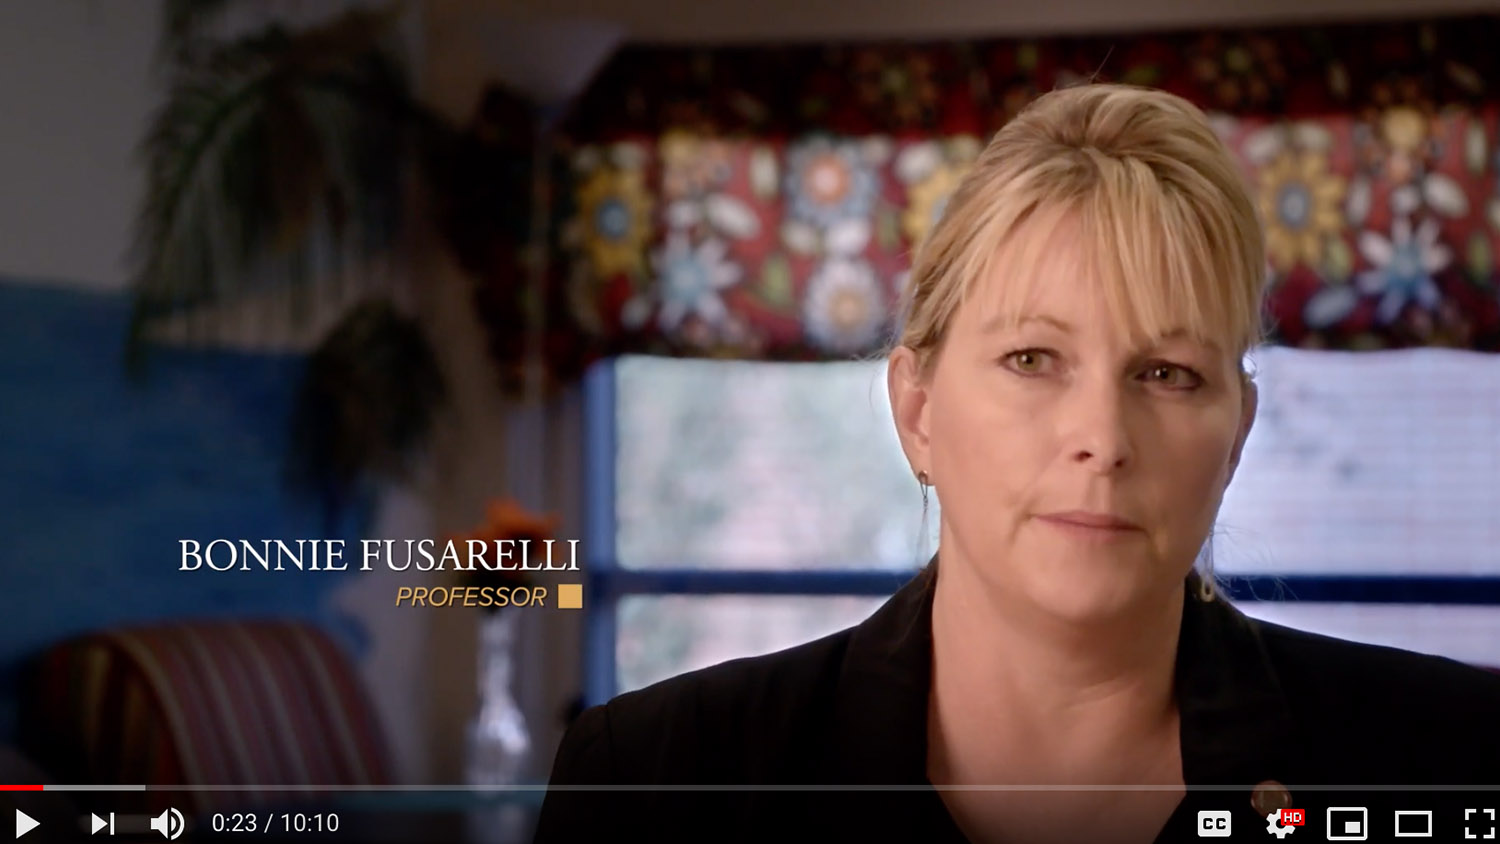 Screenshot of Video Clip Featuring Professor Bonnie Fusarelli